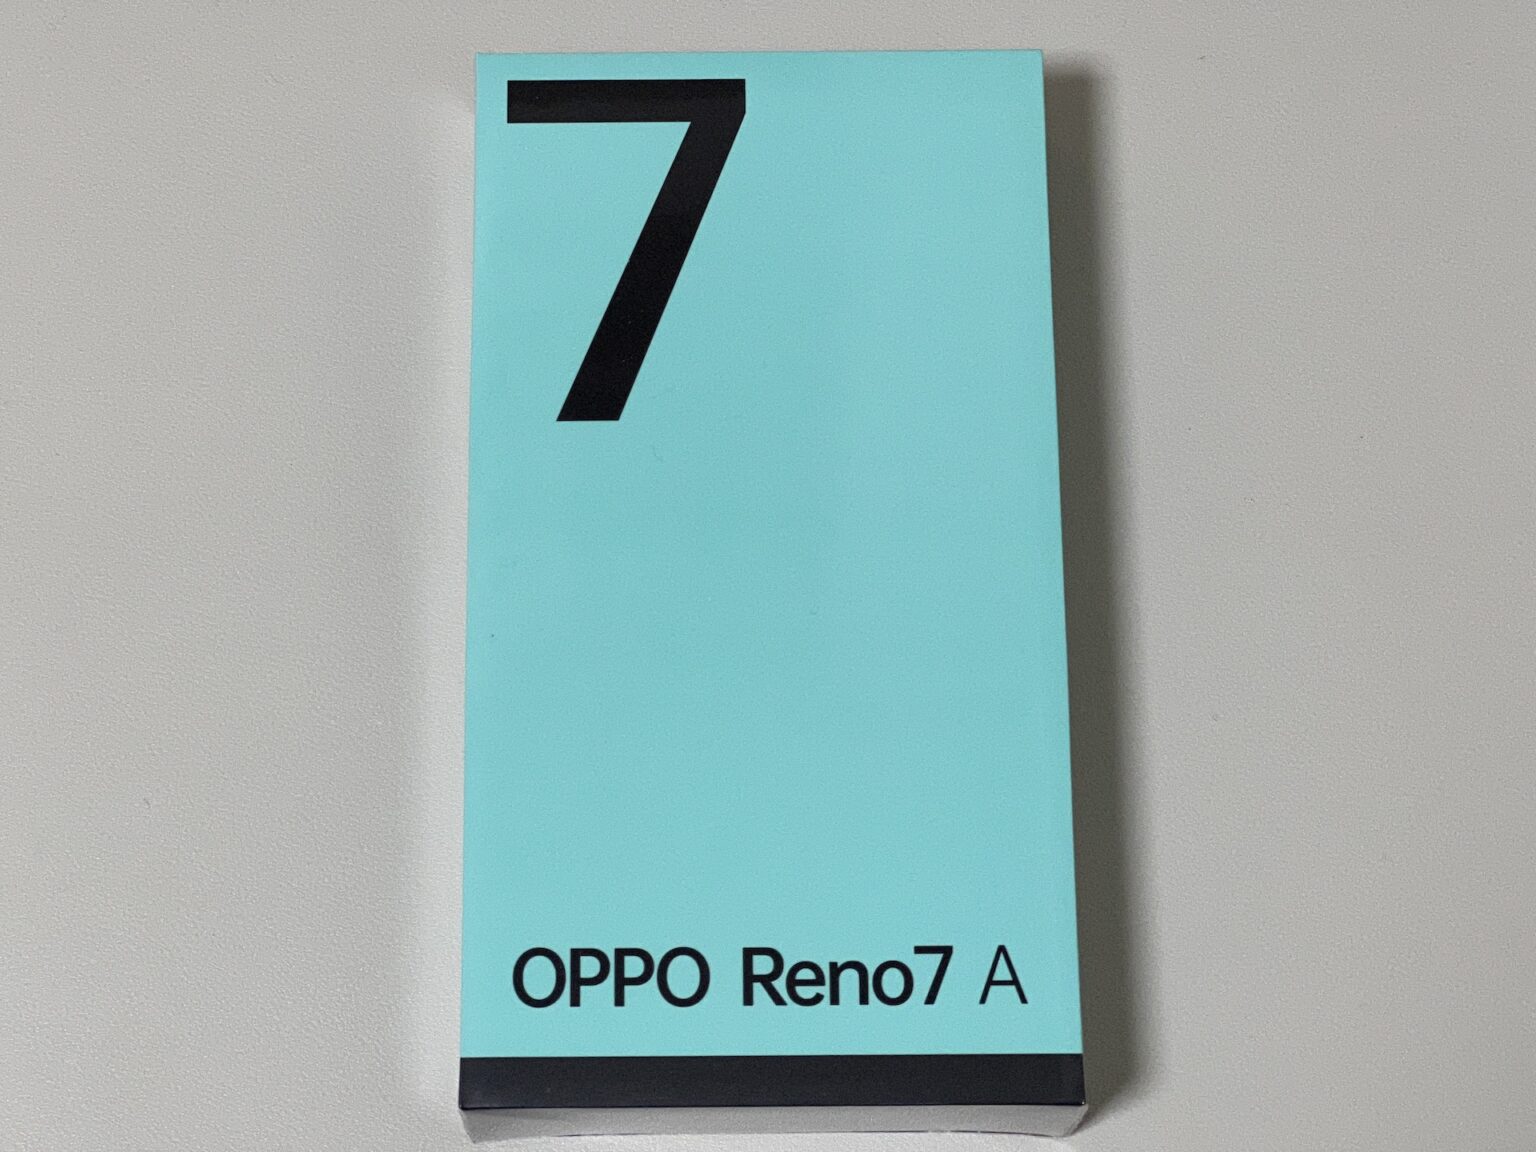 OPPO Reno7 Aを購入。ドリームブルー。開封写真。簡単な感想レビュー。軽くてデザインが良い